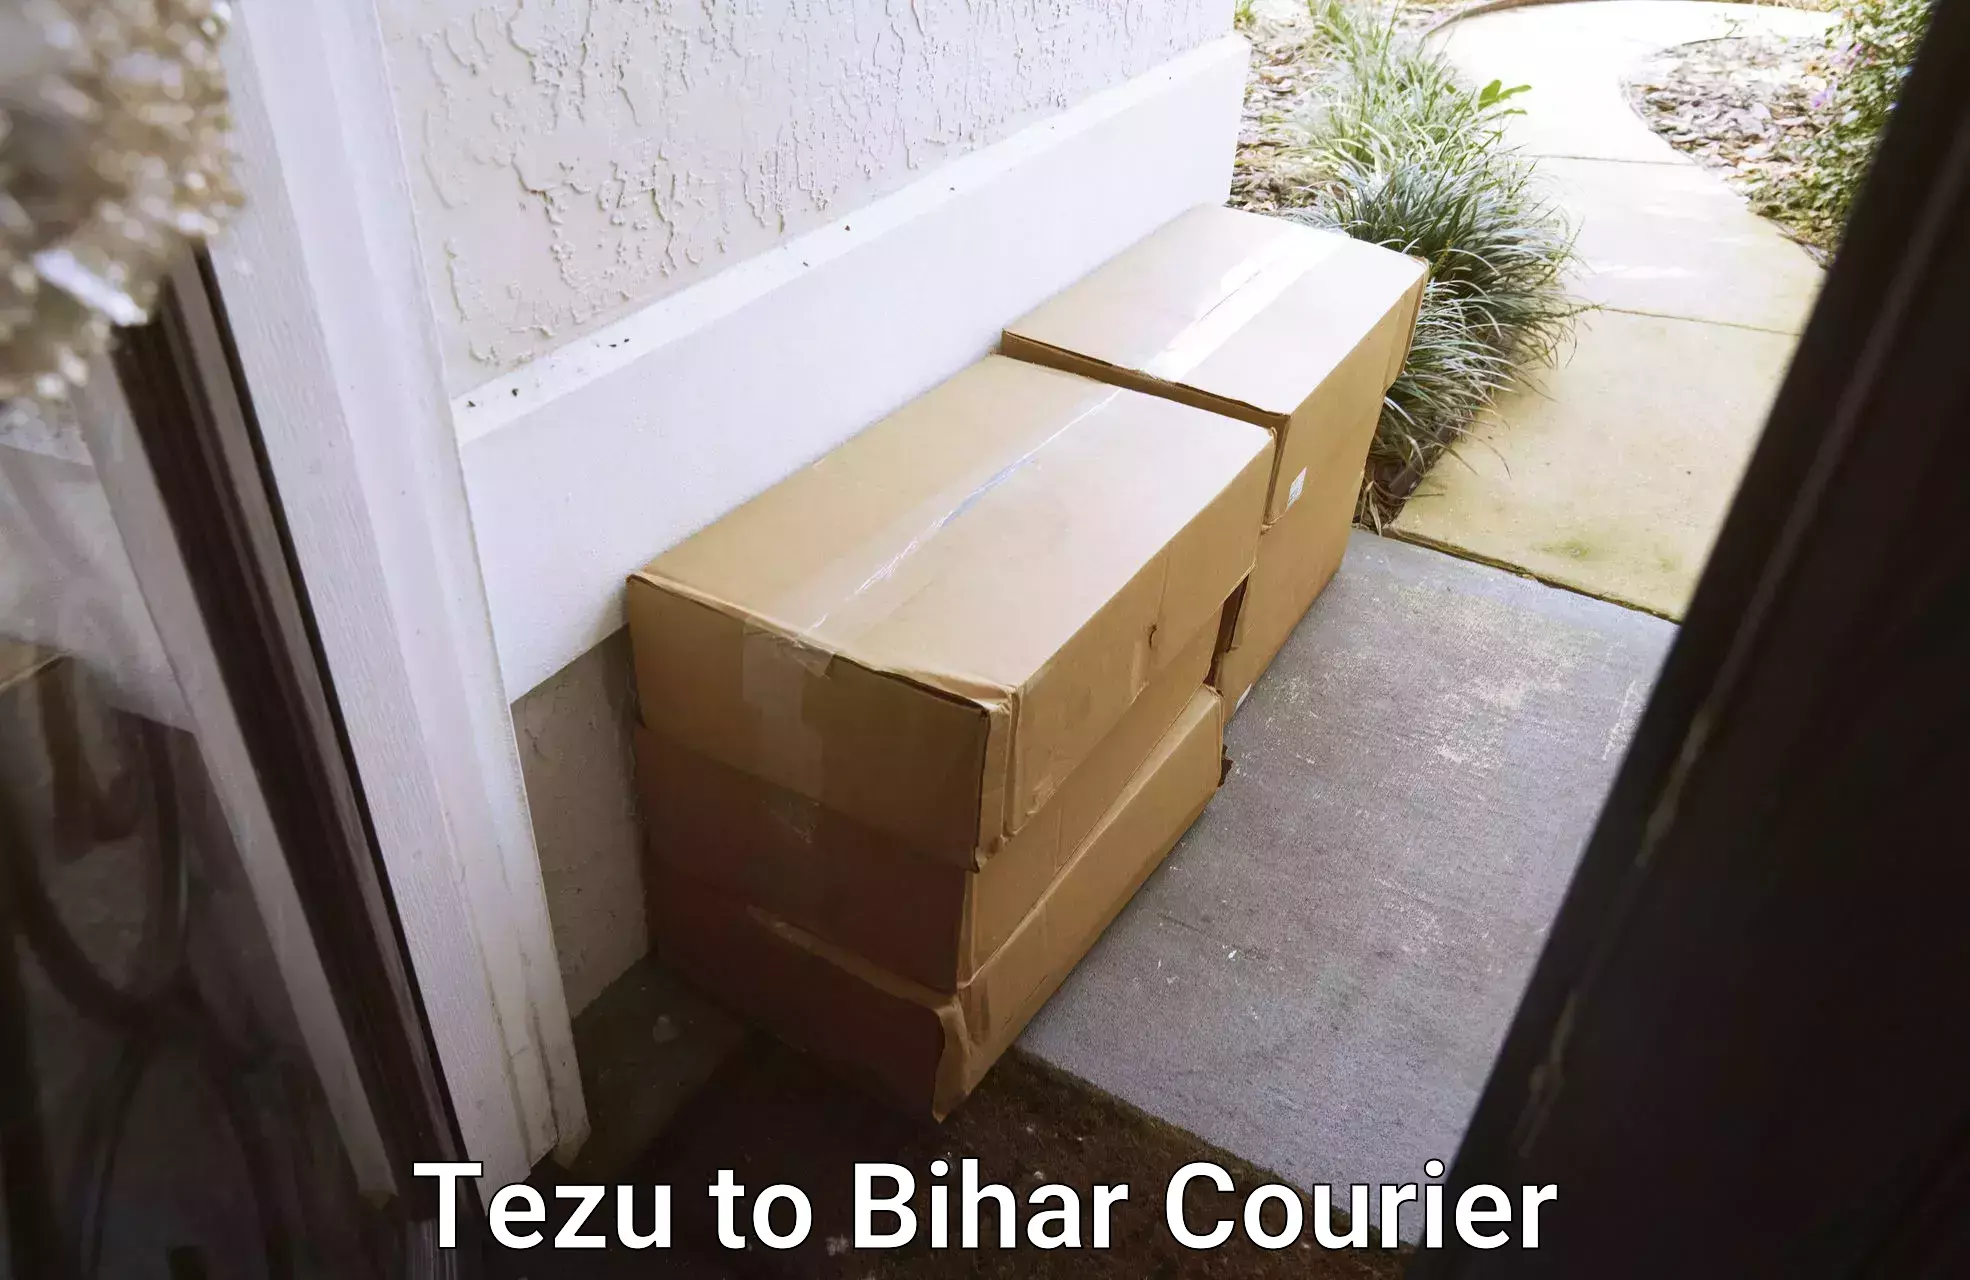 Supply chain efficiency Tezu to Bihar